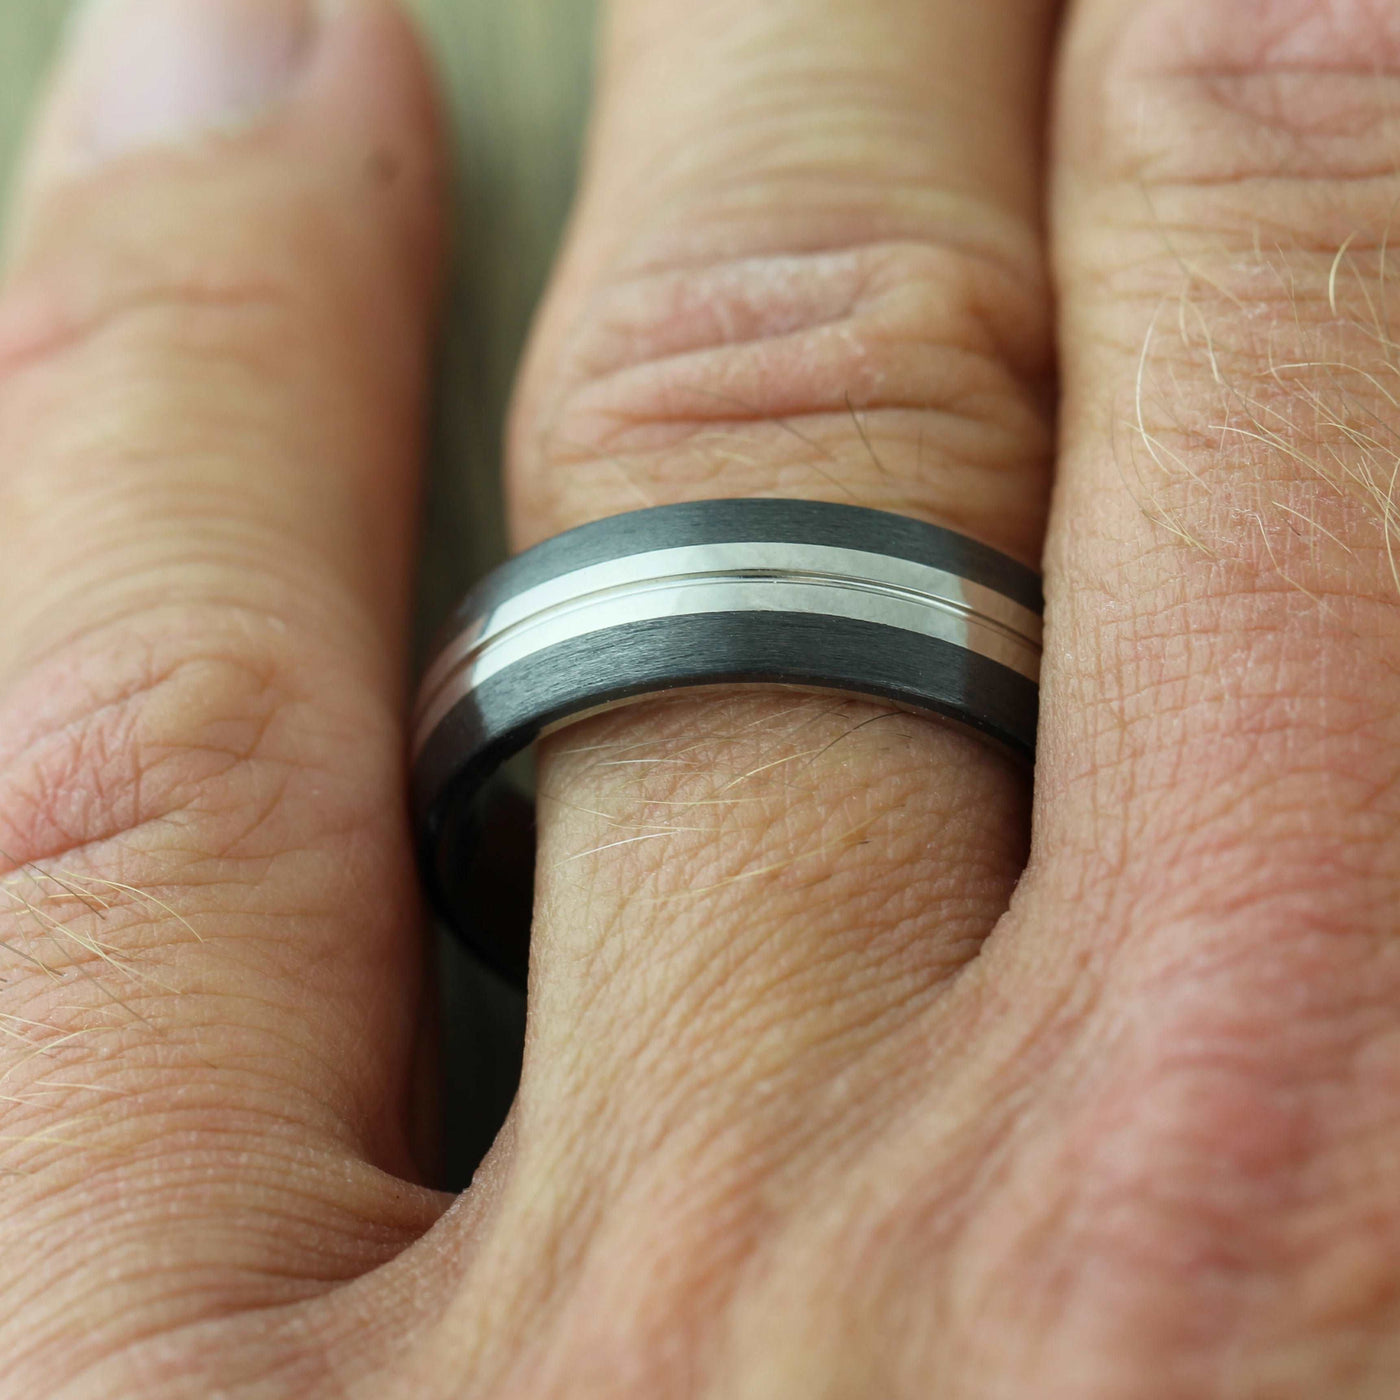 Polished Titanium & Carbon Fibre wedding Ring with FREE Engraving